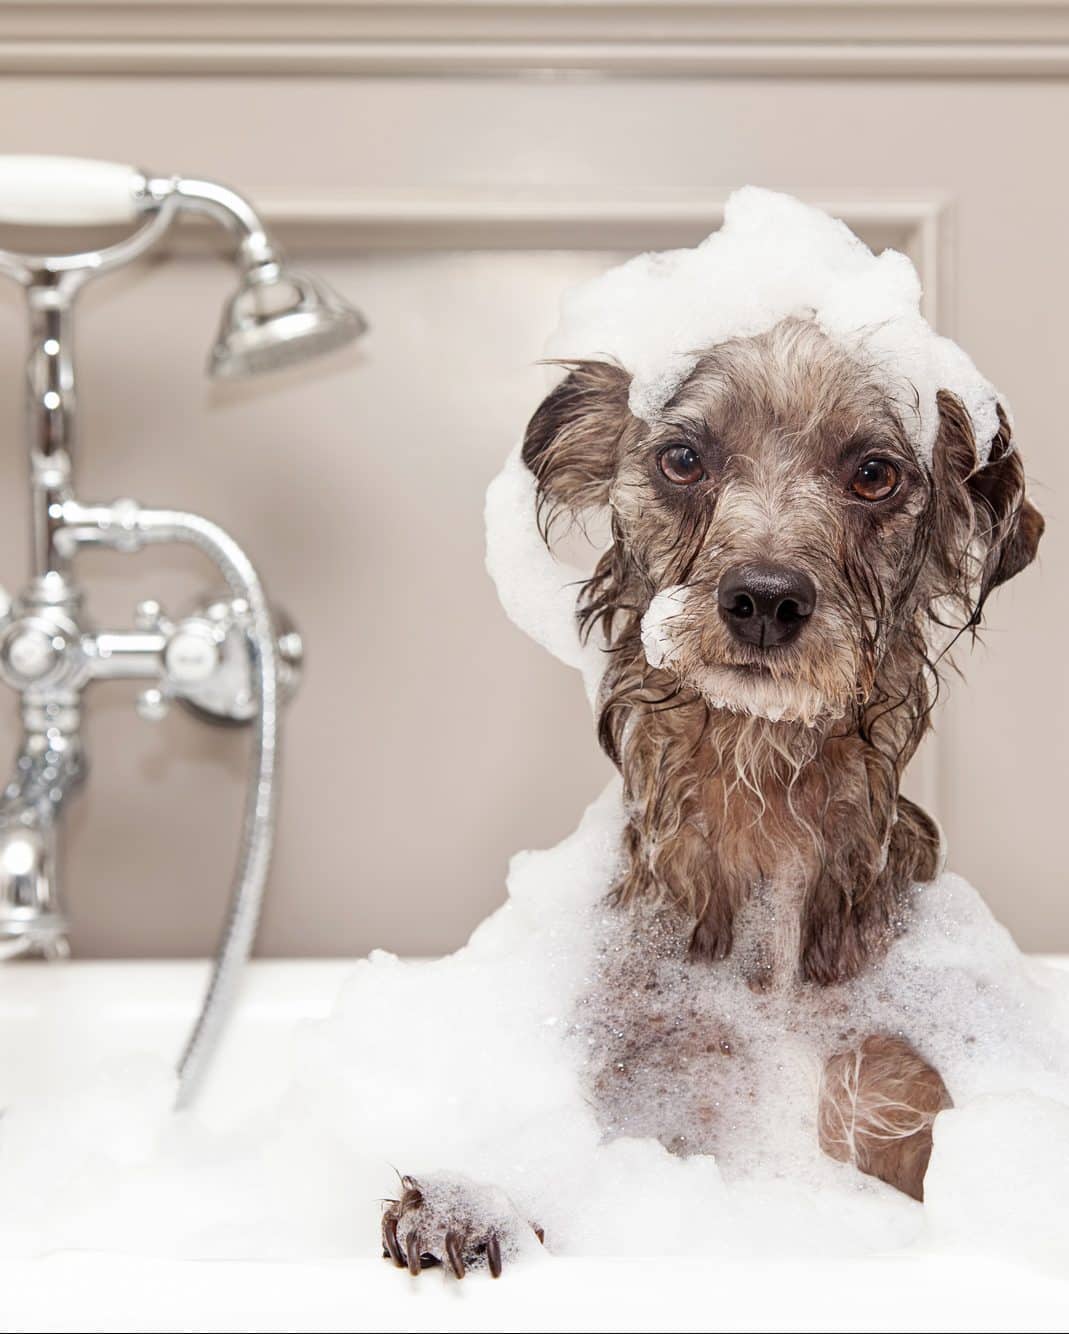 A dog in a bubble bath